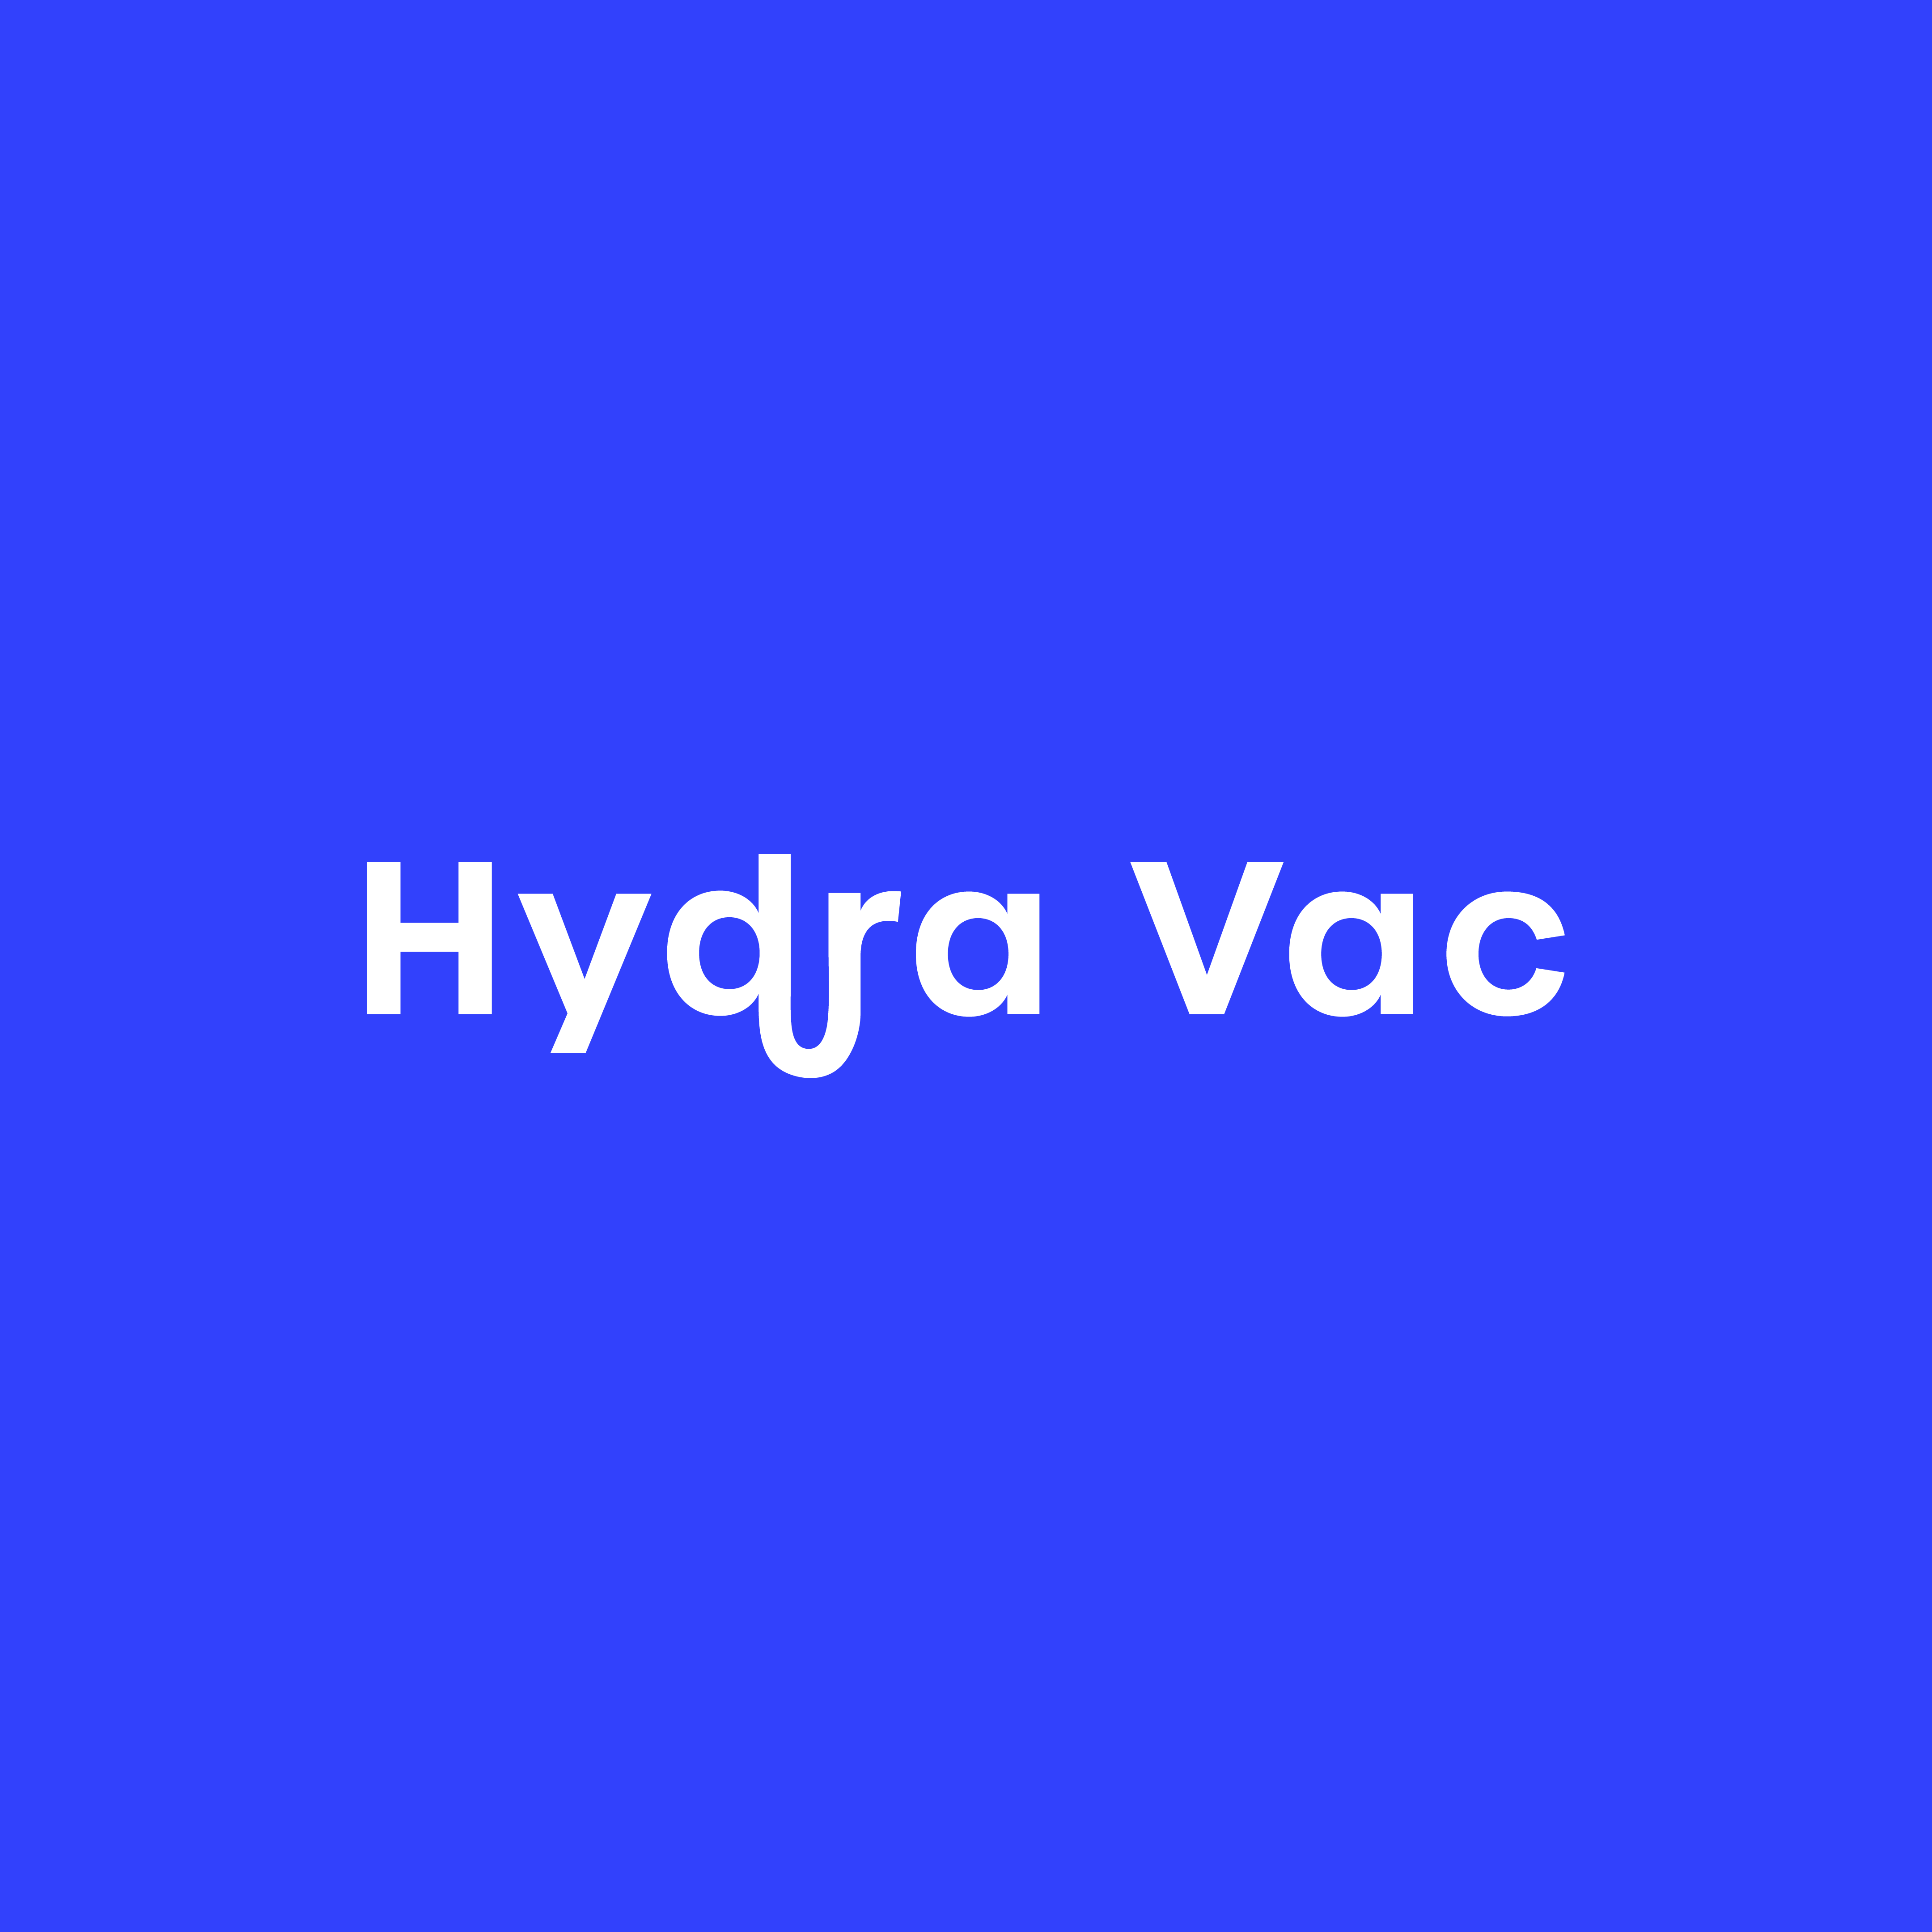 Hydra Vac brand identity design